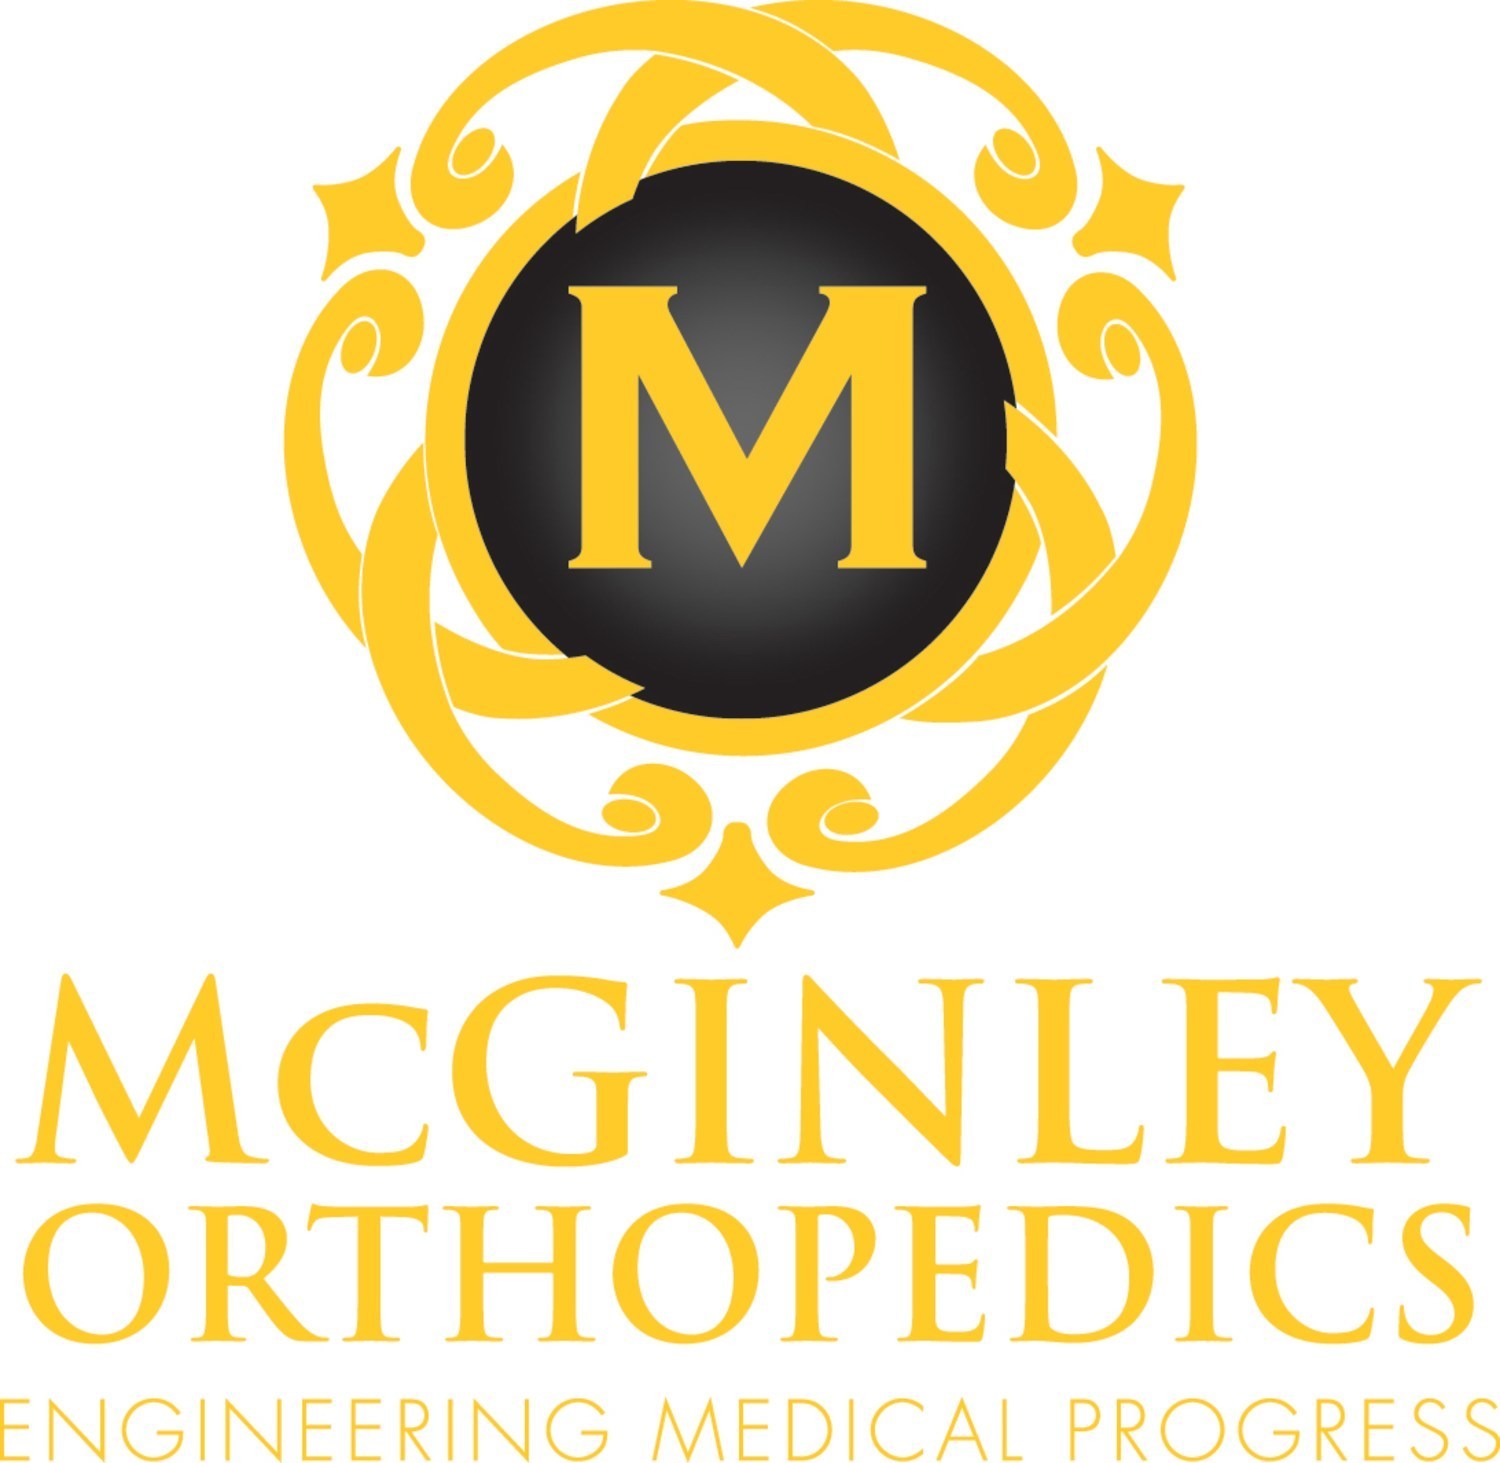 McGinley Orthopaedic Innovations